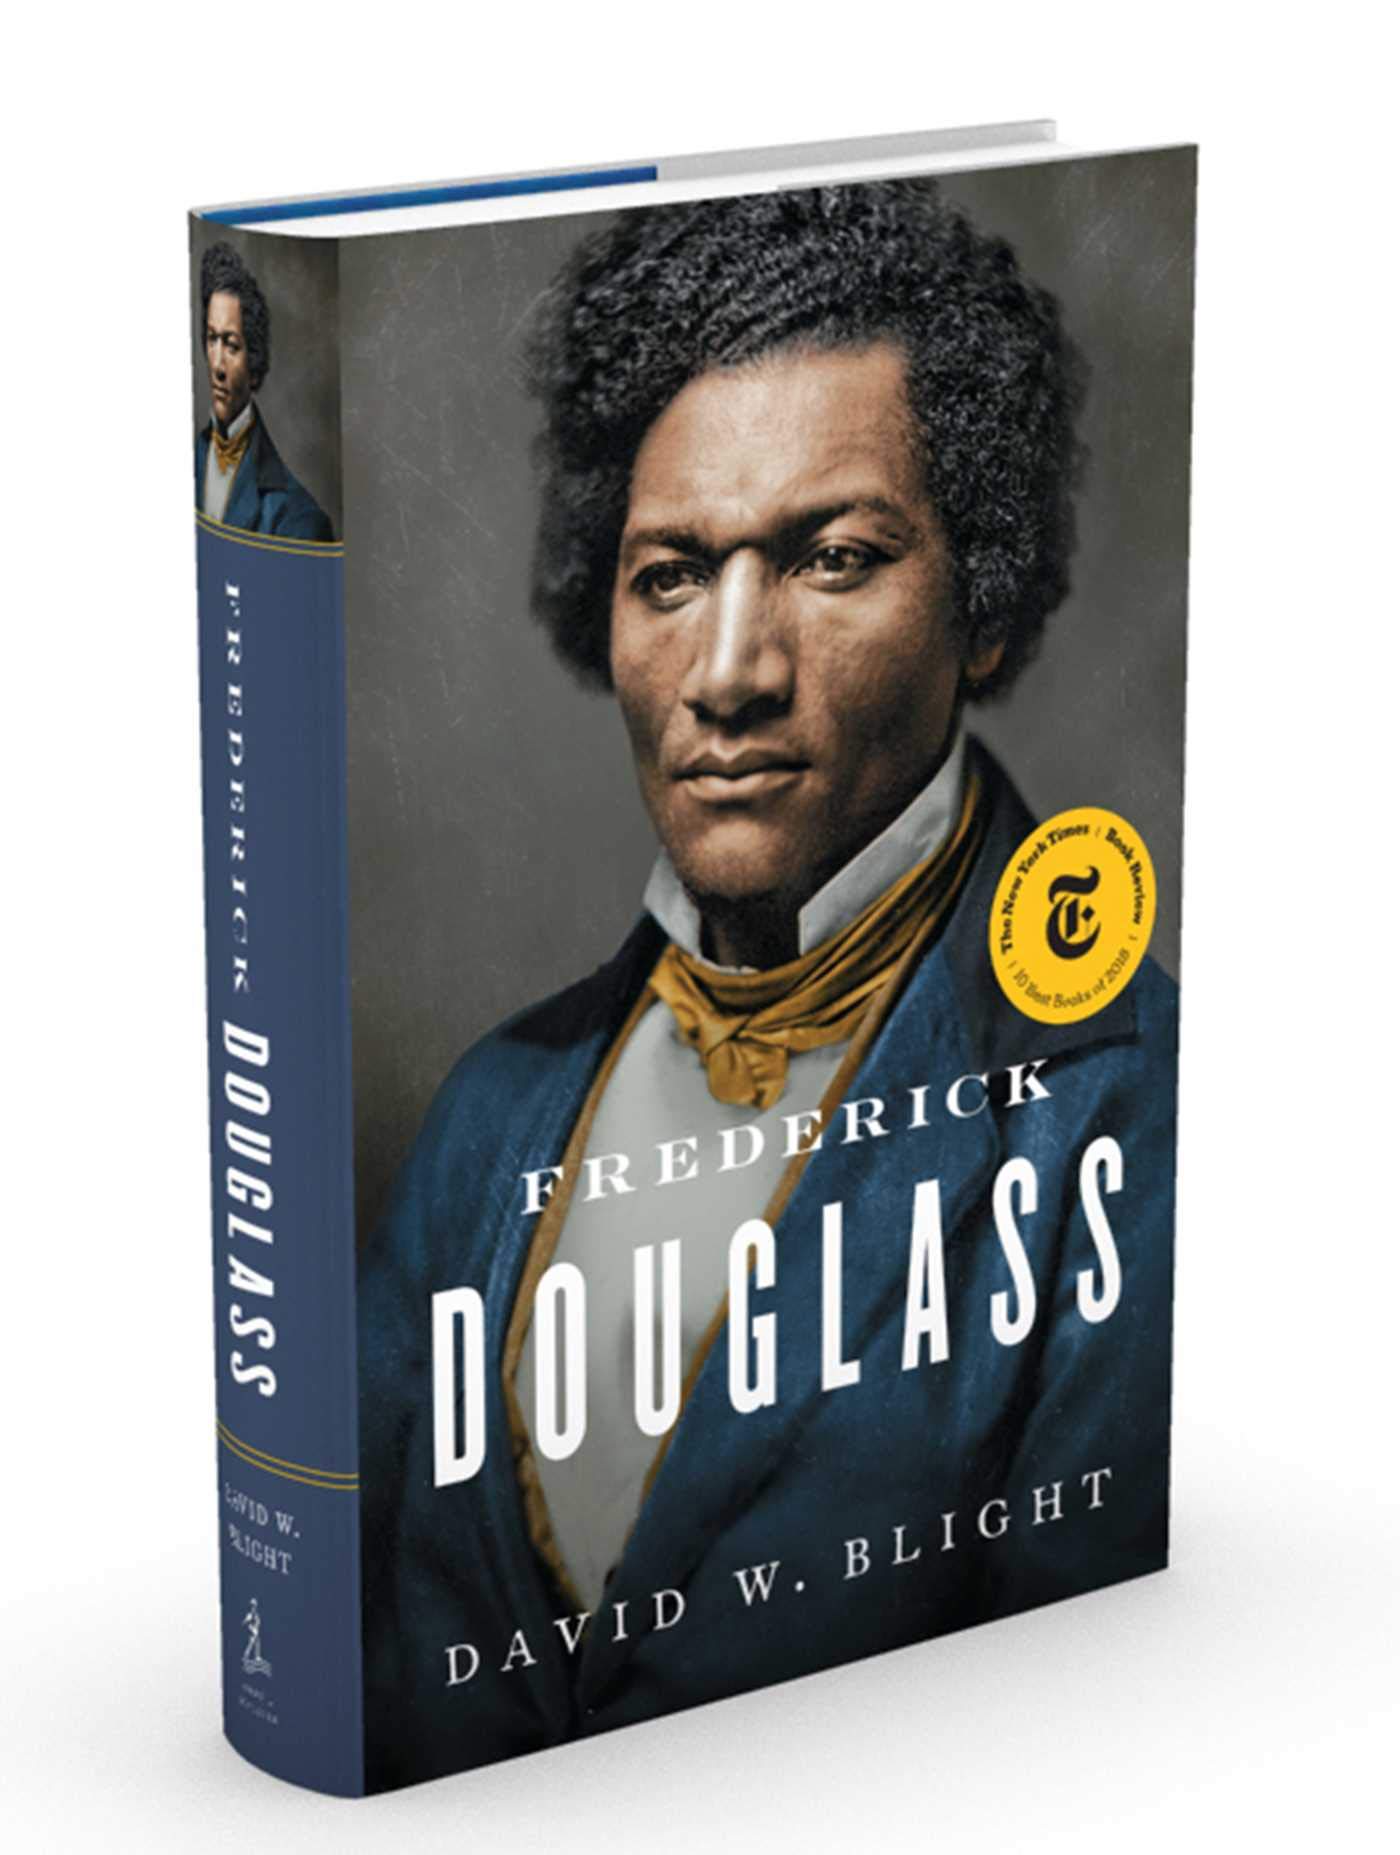 Frederick Douglass: Prophet of Freedom (Roughcut)